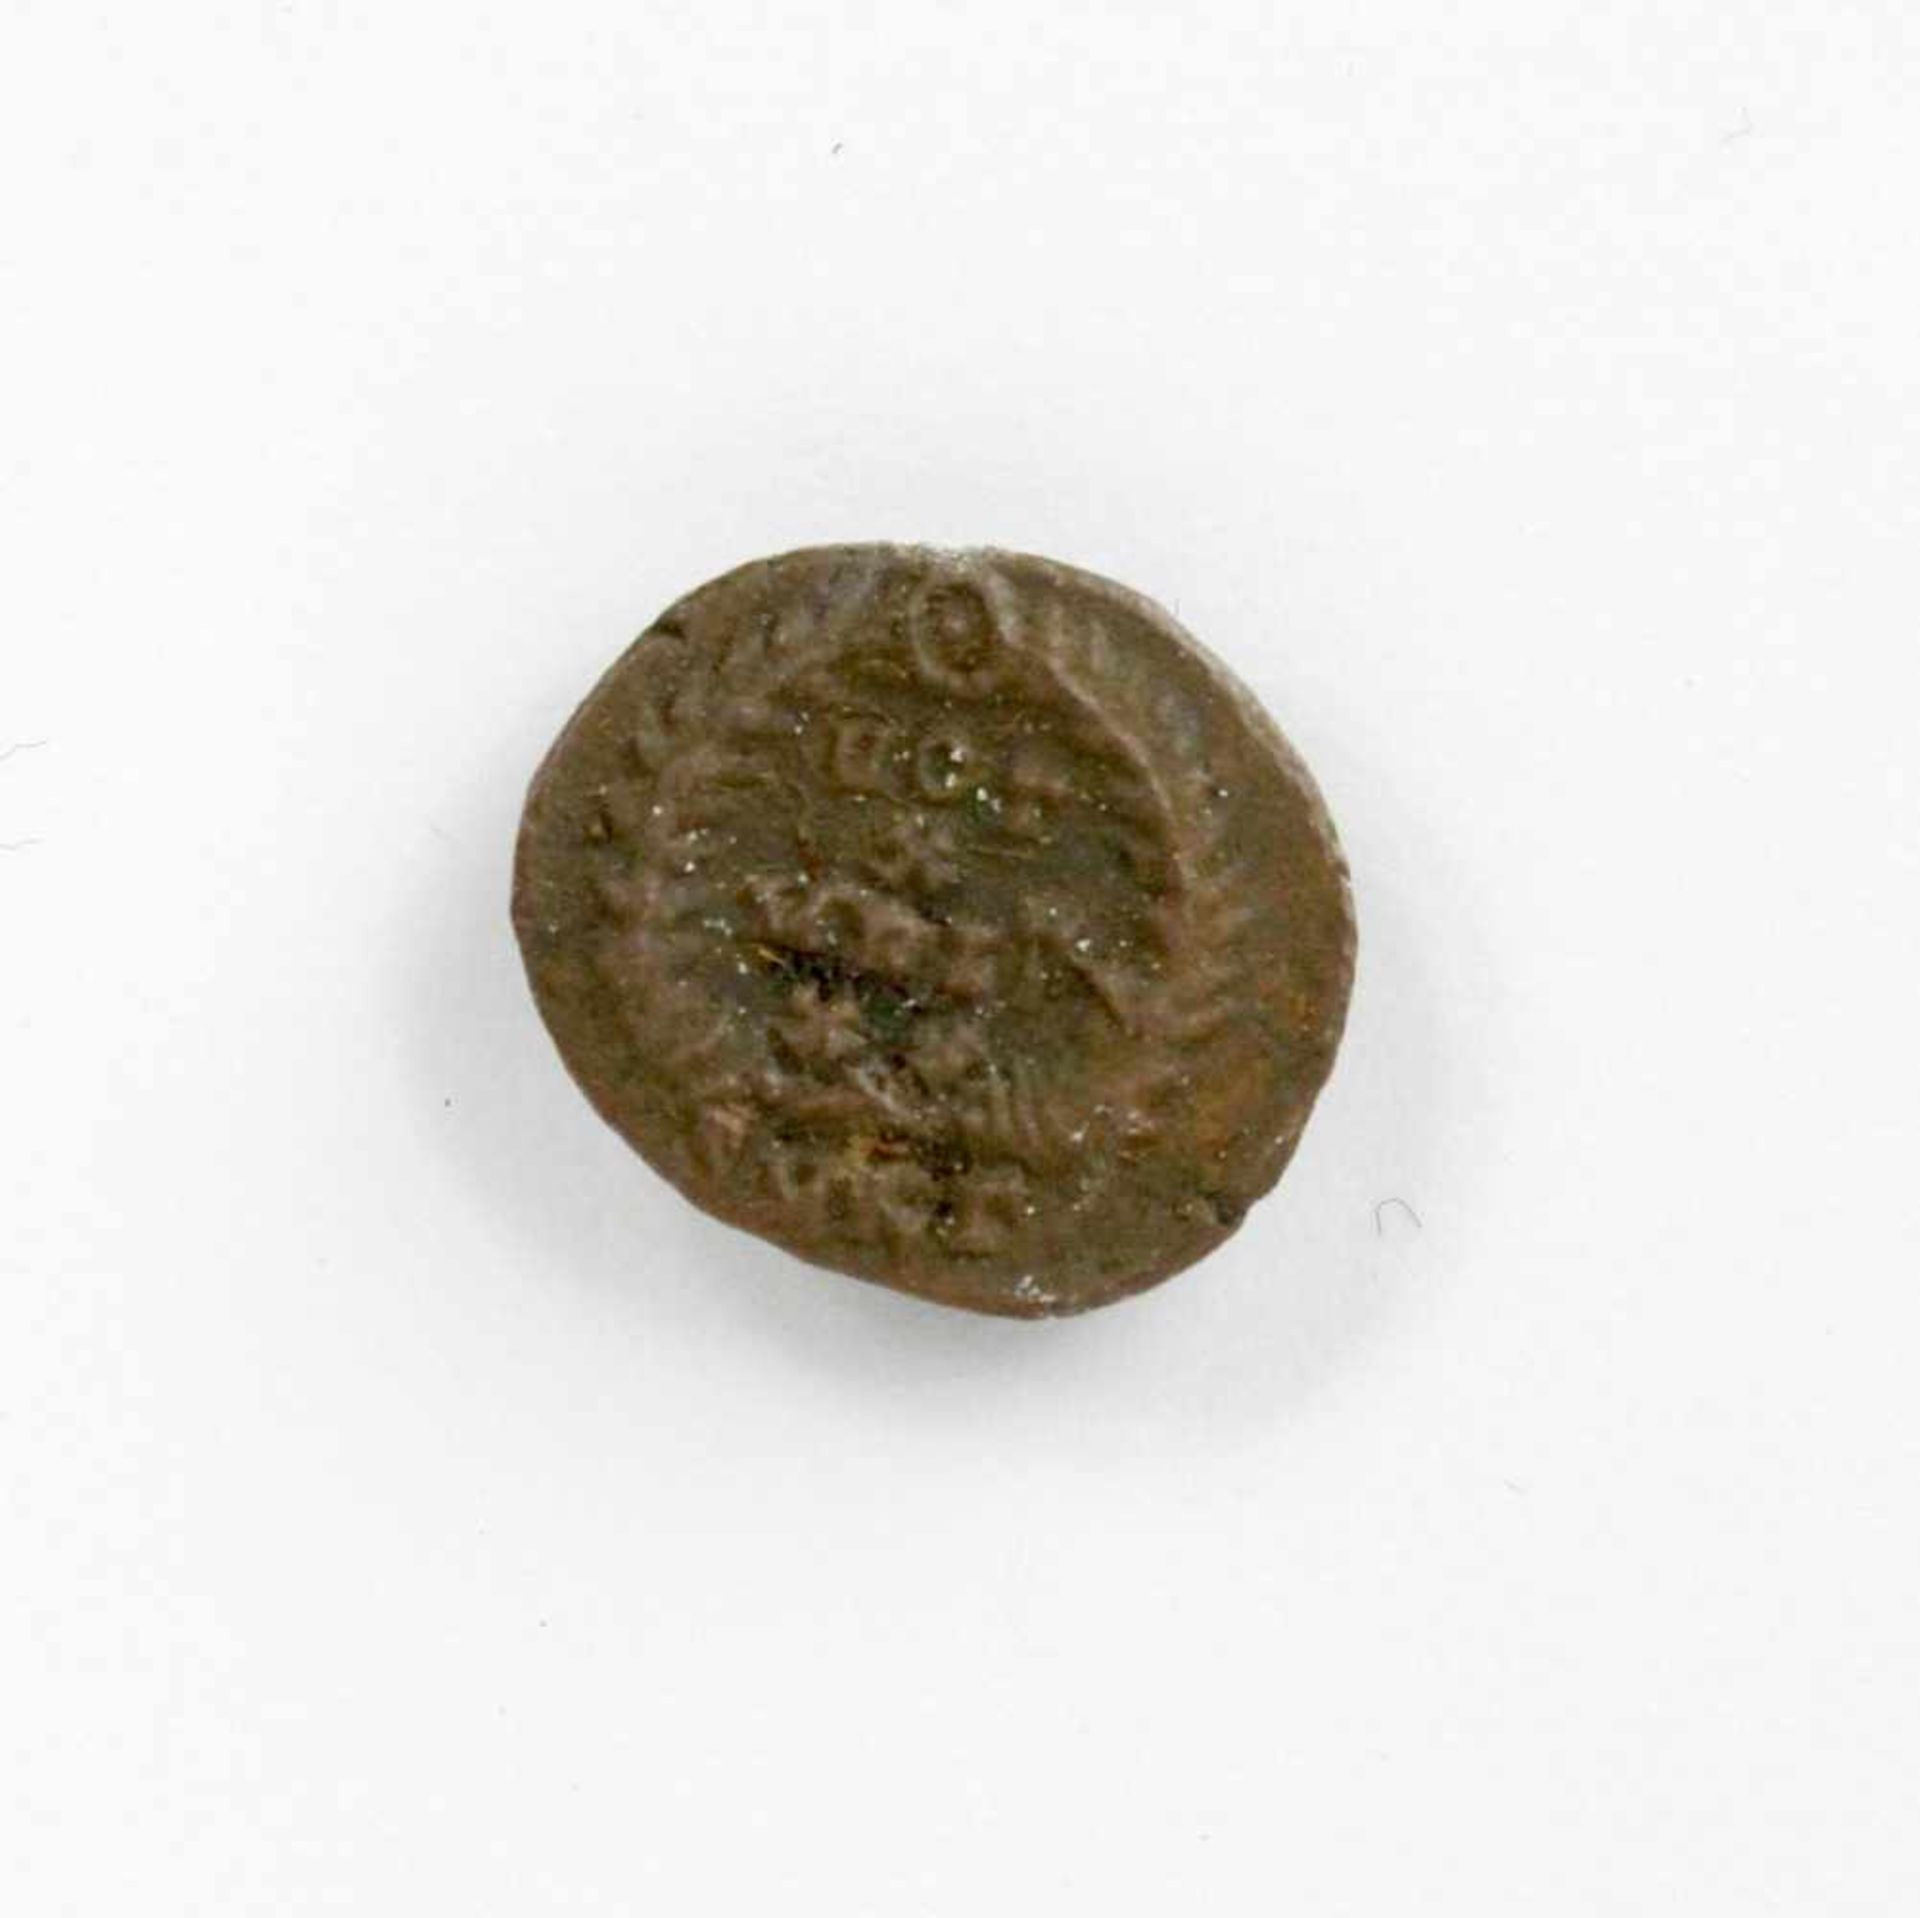 Originale Römische Münze " Theodosius I. "<b - Bild 2 aus 3